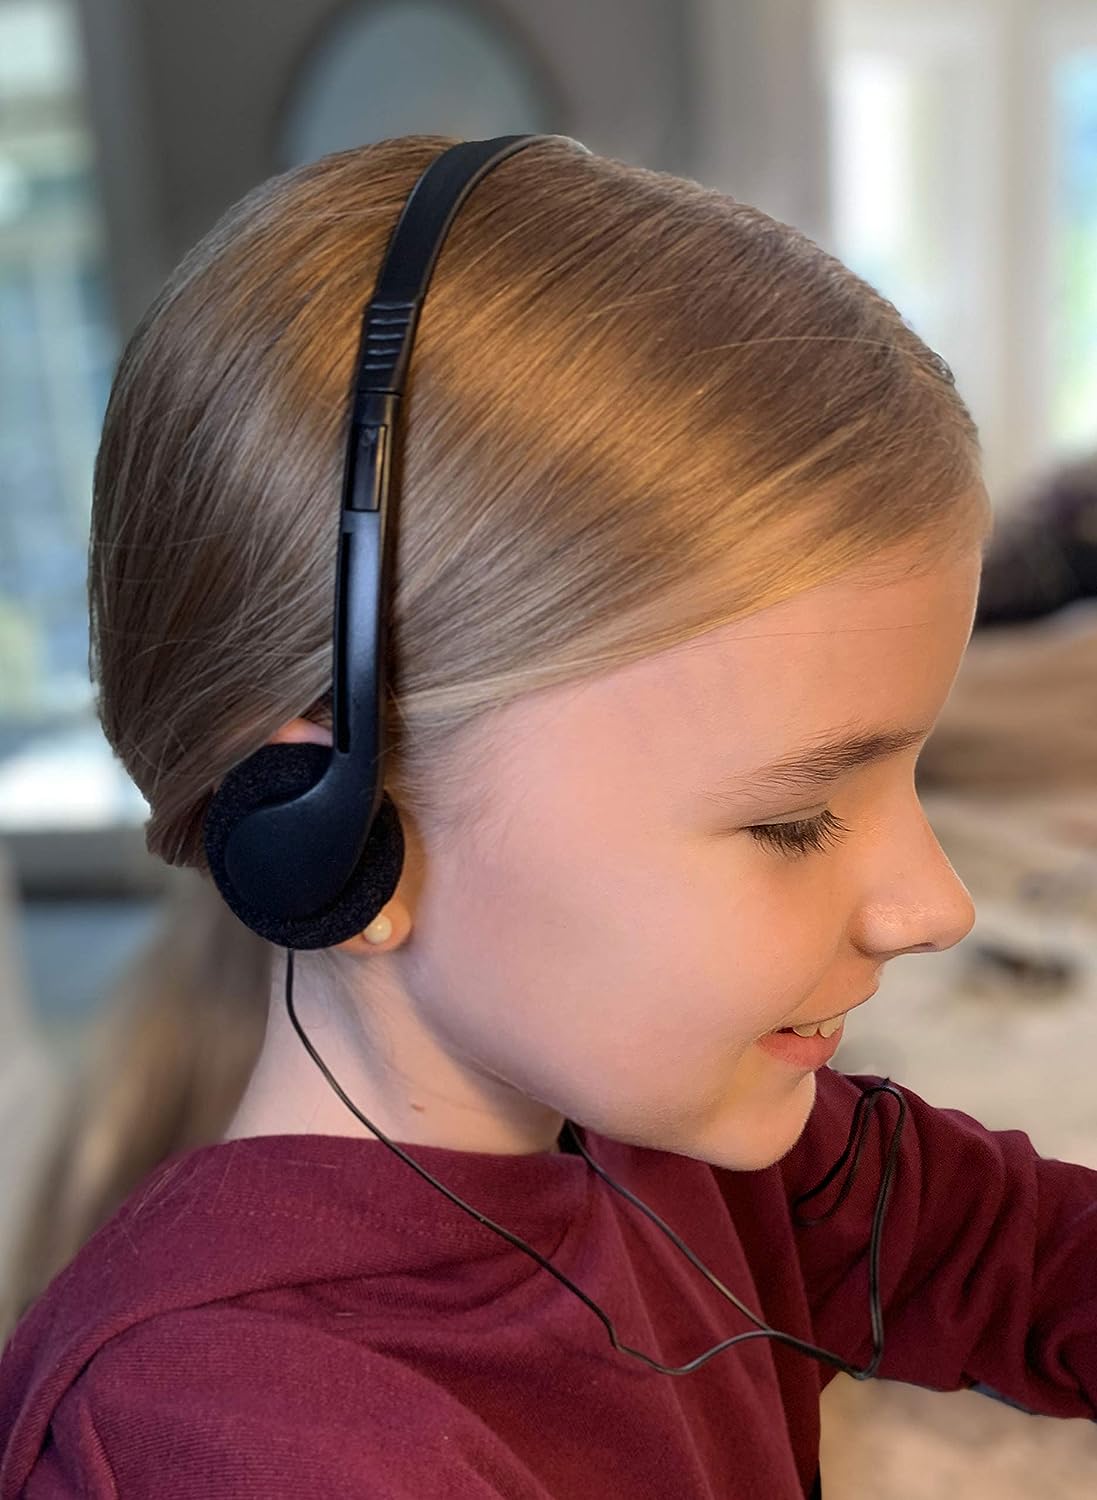 Headphone in use classroom setting